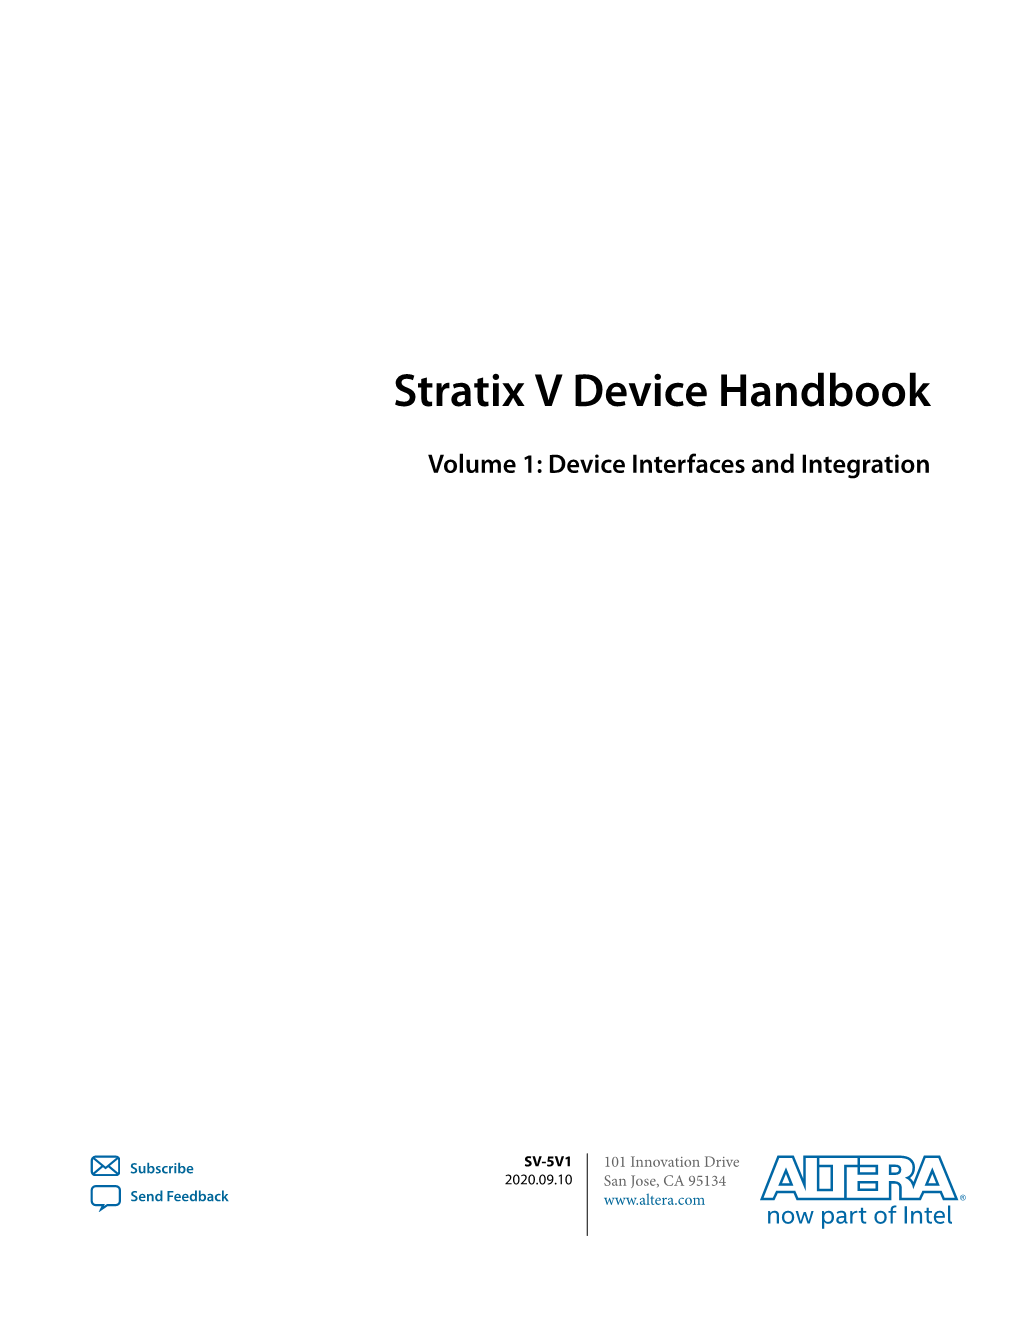 Stratix V Device Handbook Volume 1: Device Interfaces and Integration